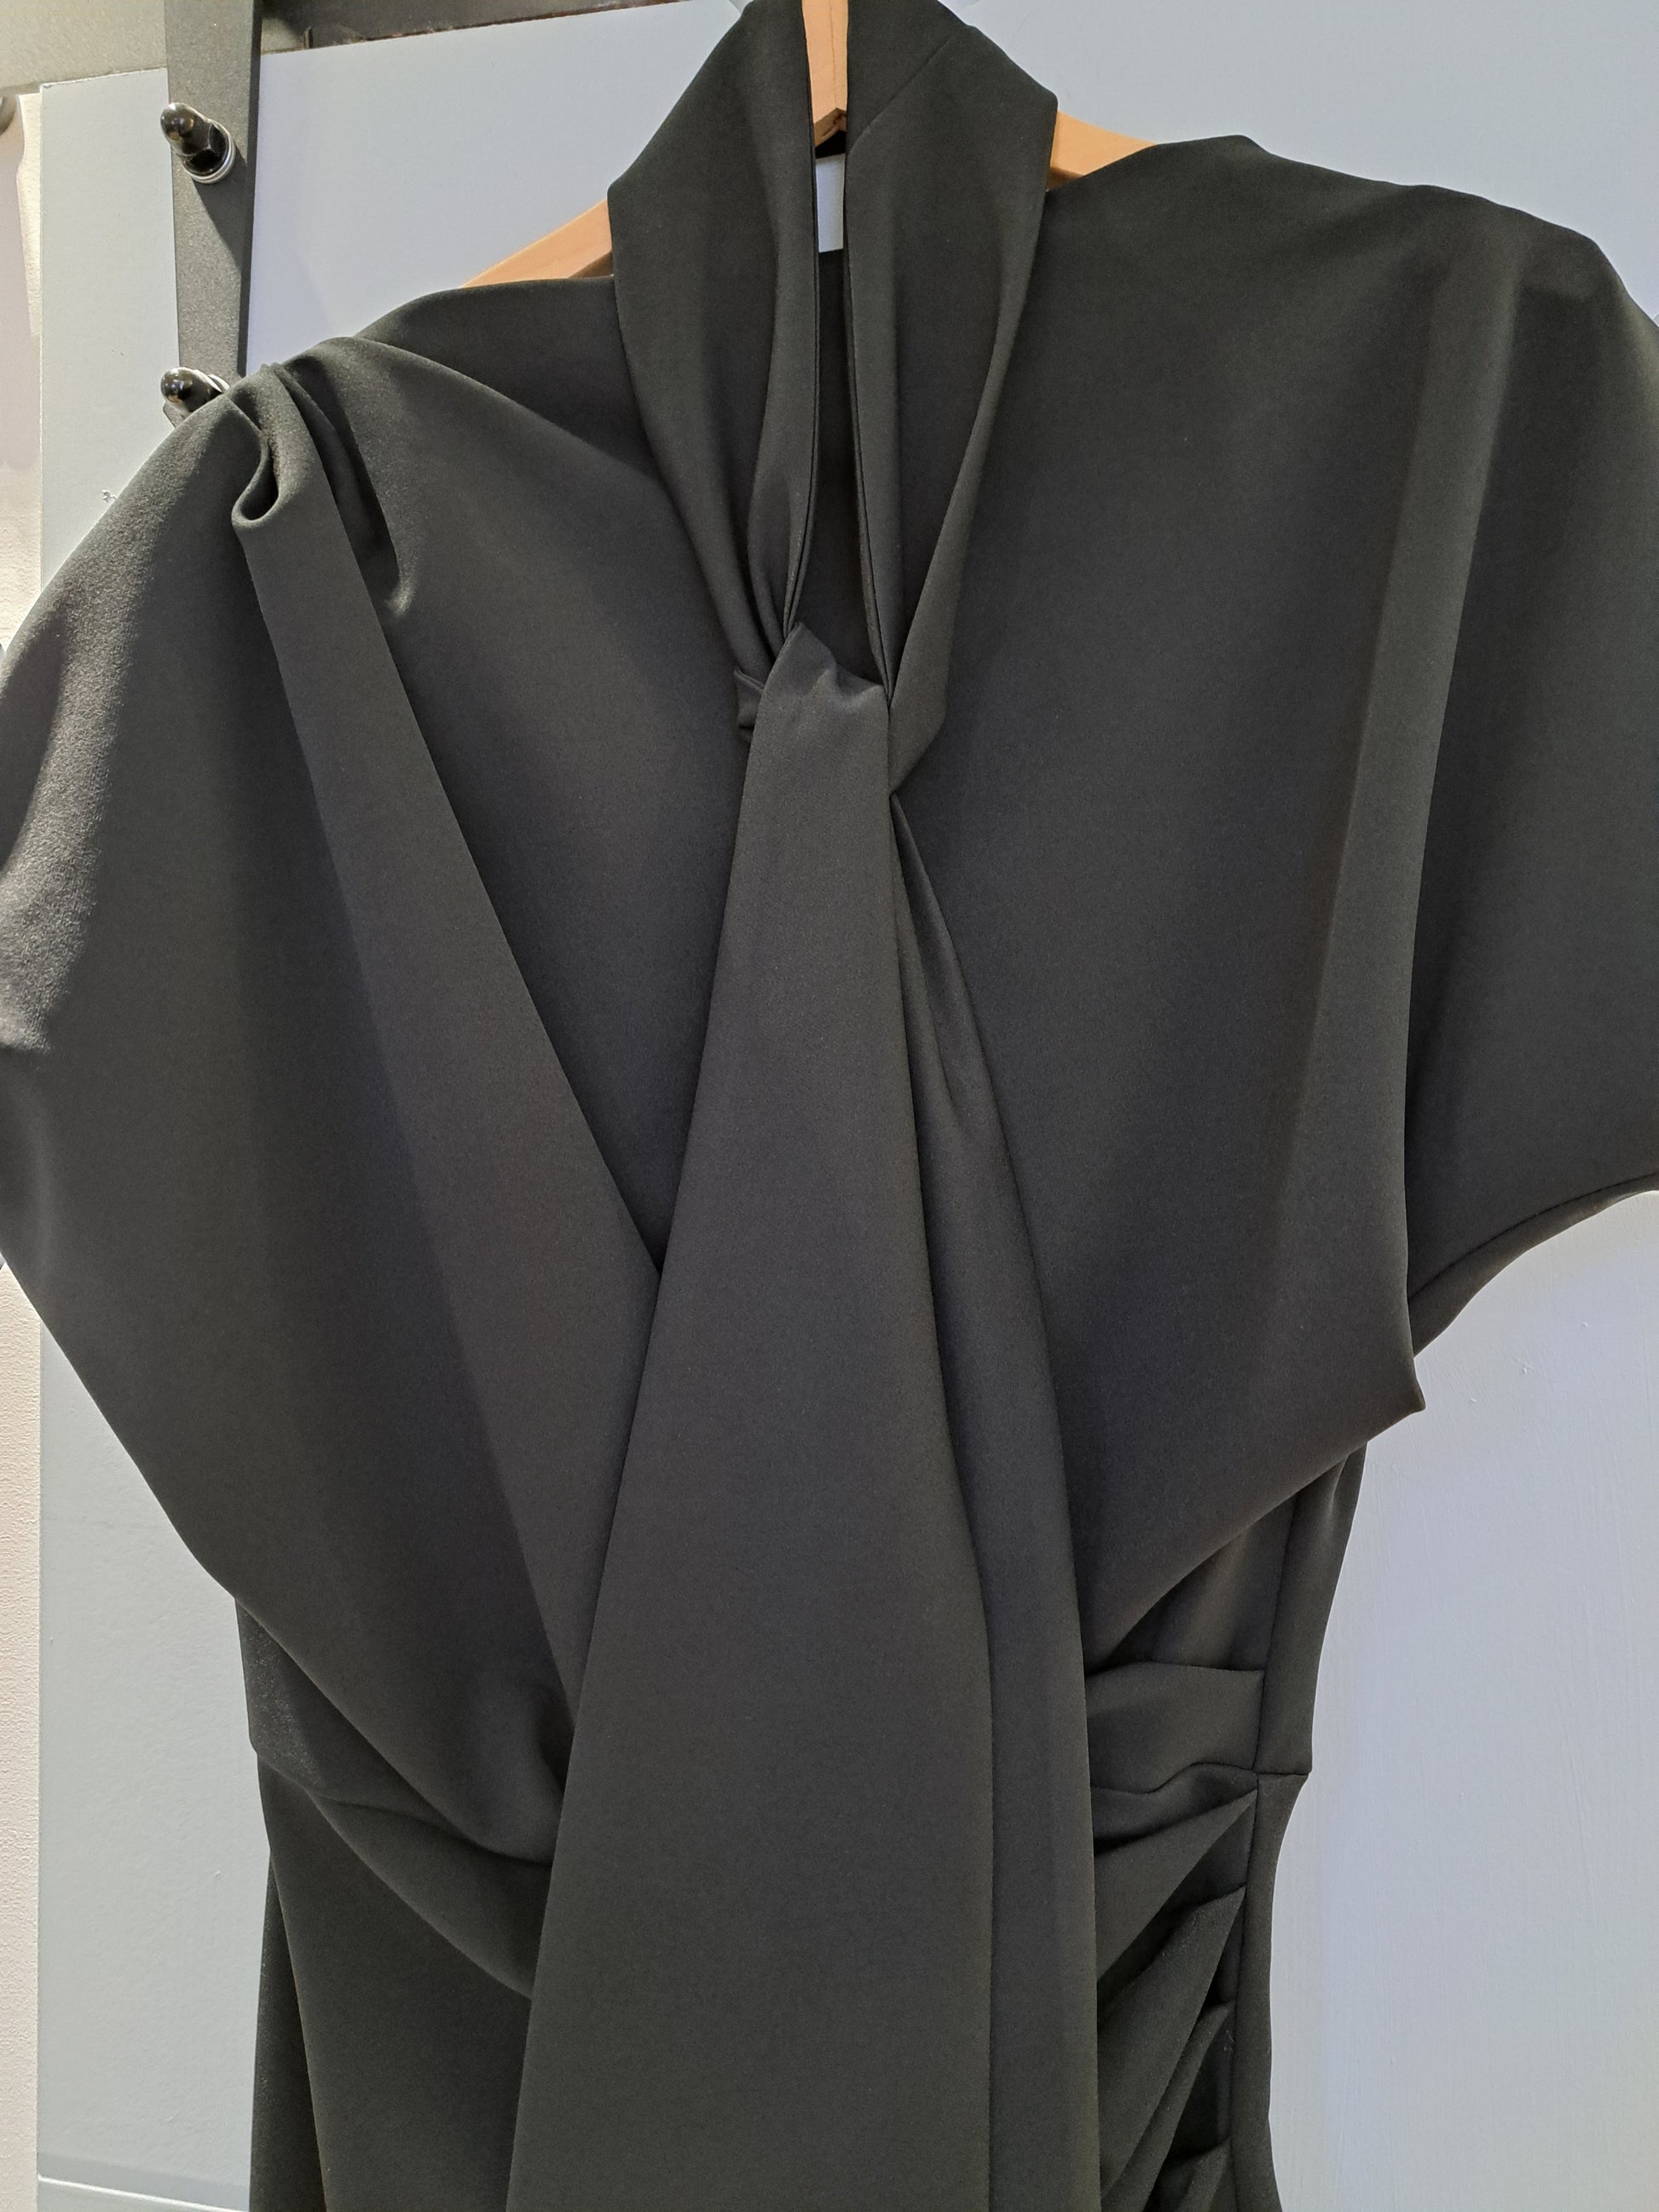 Kevan Jon Poppy tie dress BLACK - Maya Maya Ltd